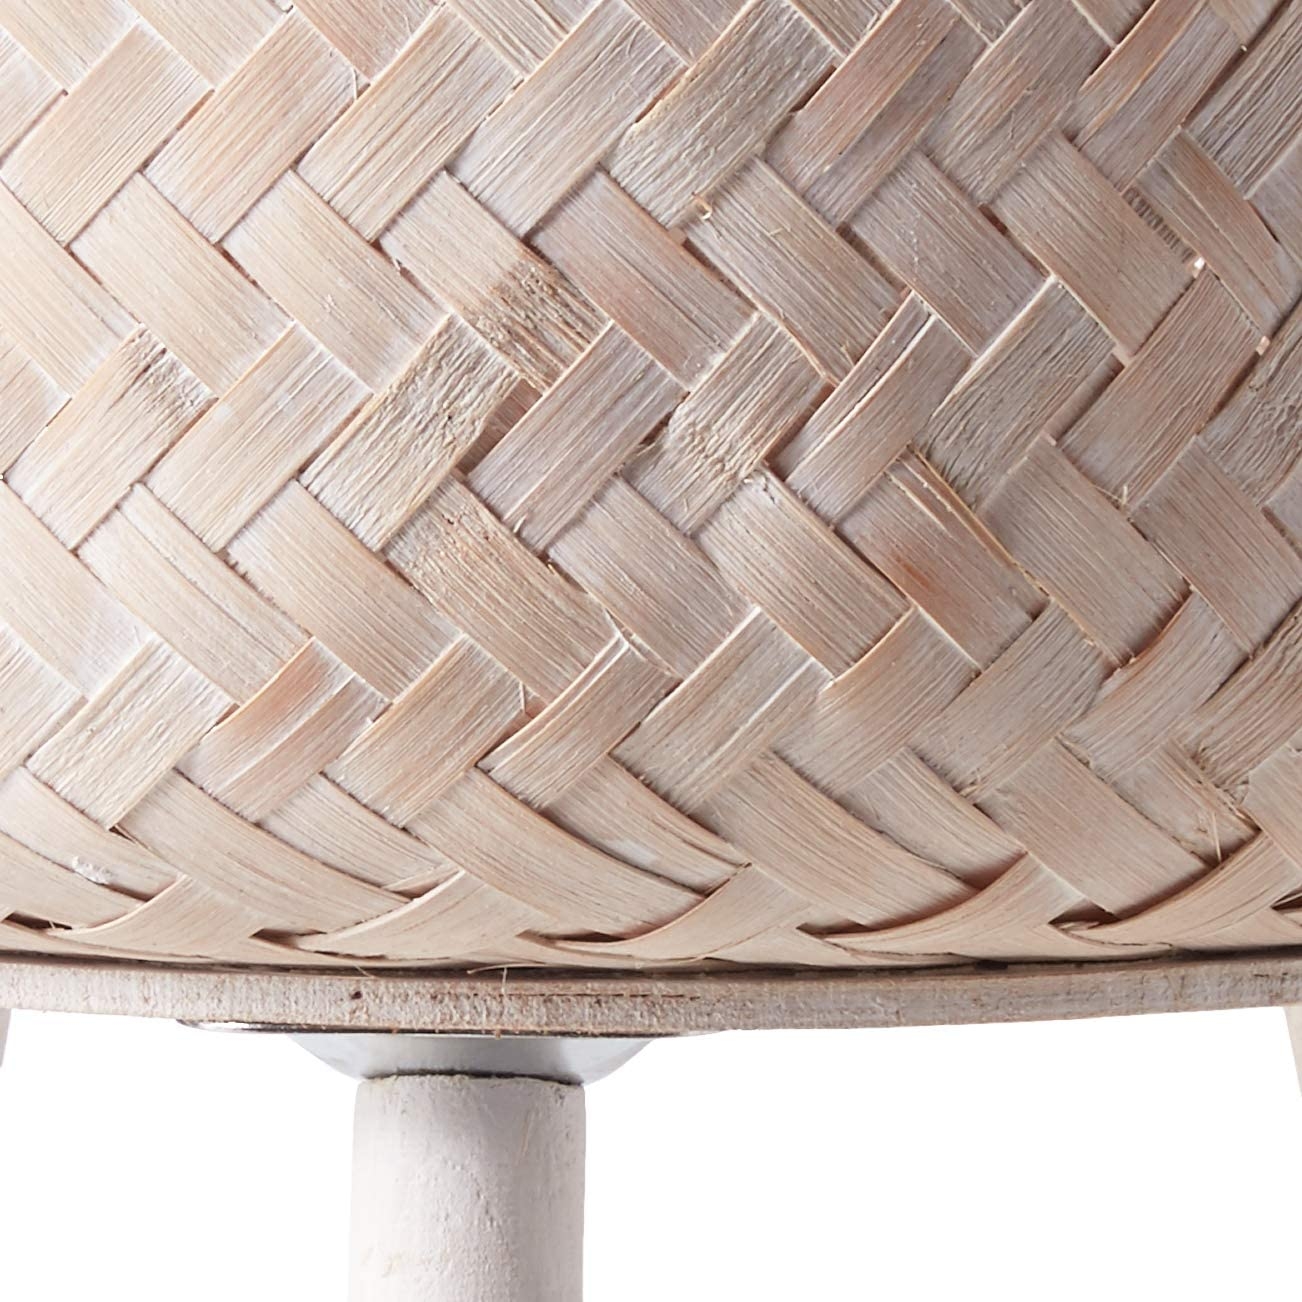 Bamboo Floor Baskets with Wood Legs, Whitewashed, Set of 3 - Image 2